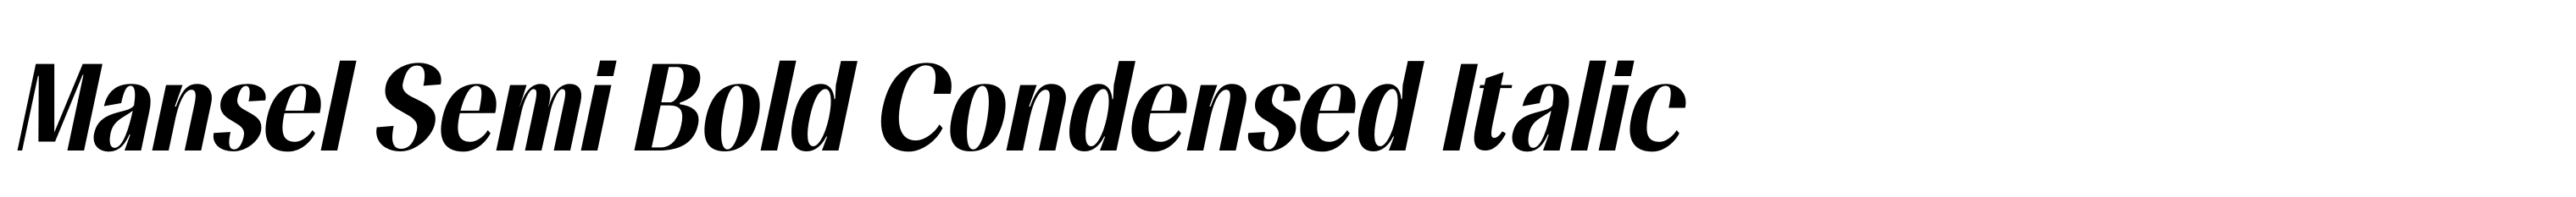 Mansel Semi Bold Condensed Italic